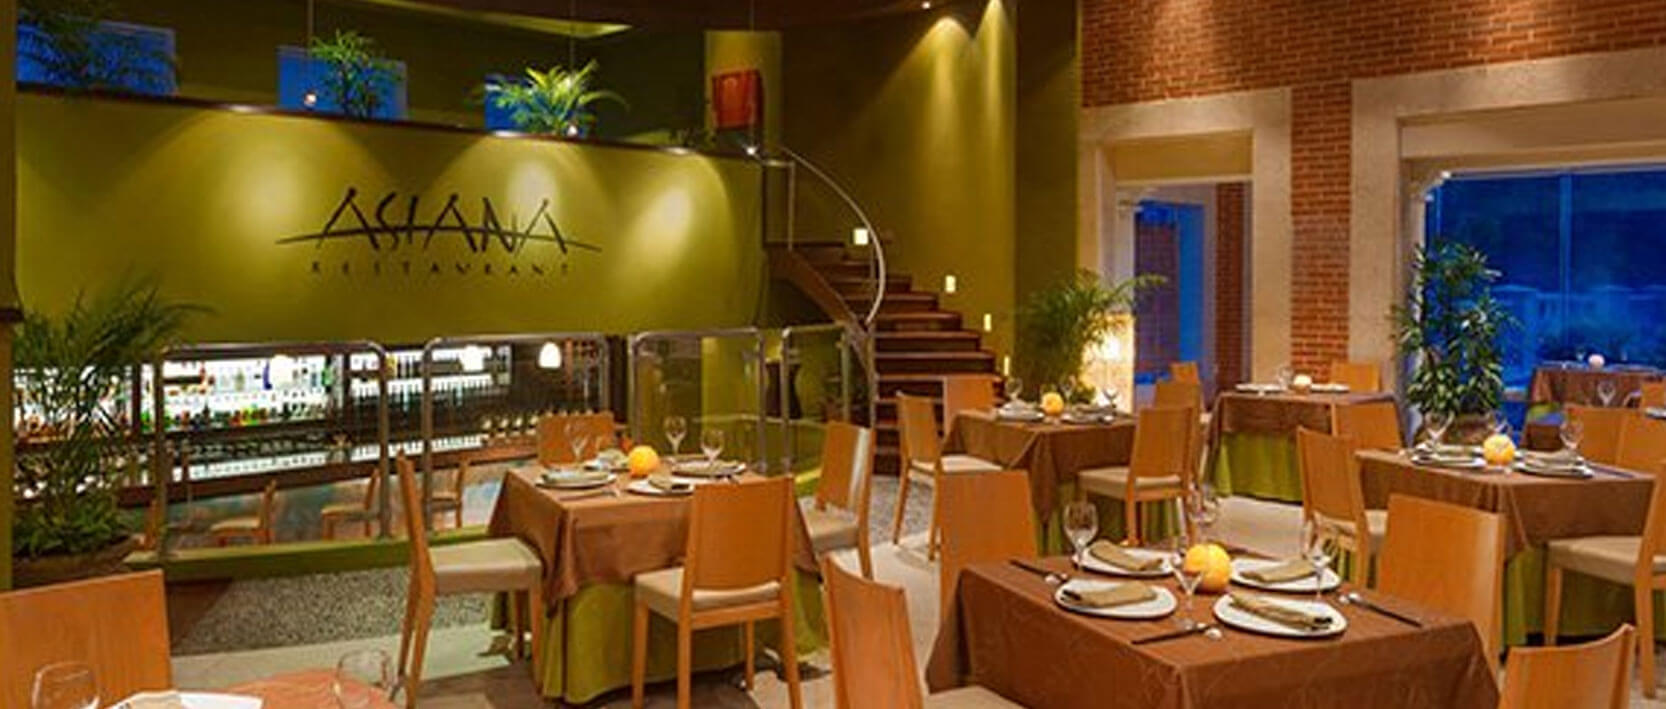 The Royal Playa Del Carmen Restaurants and Bars - Asiana